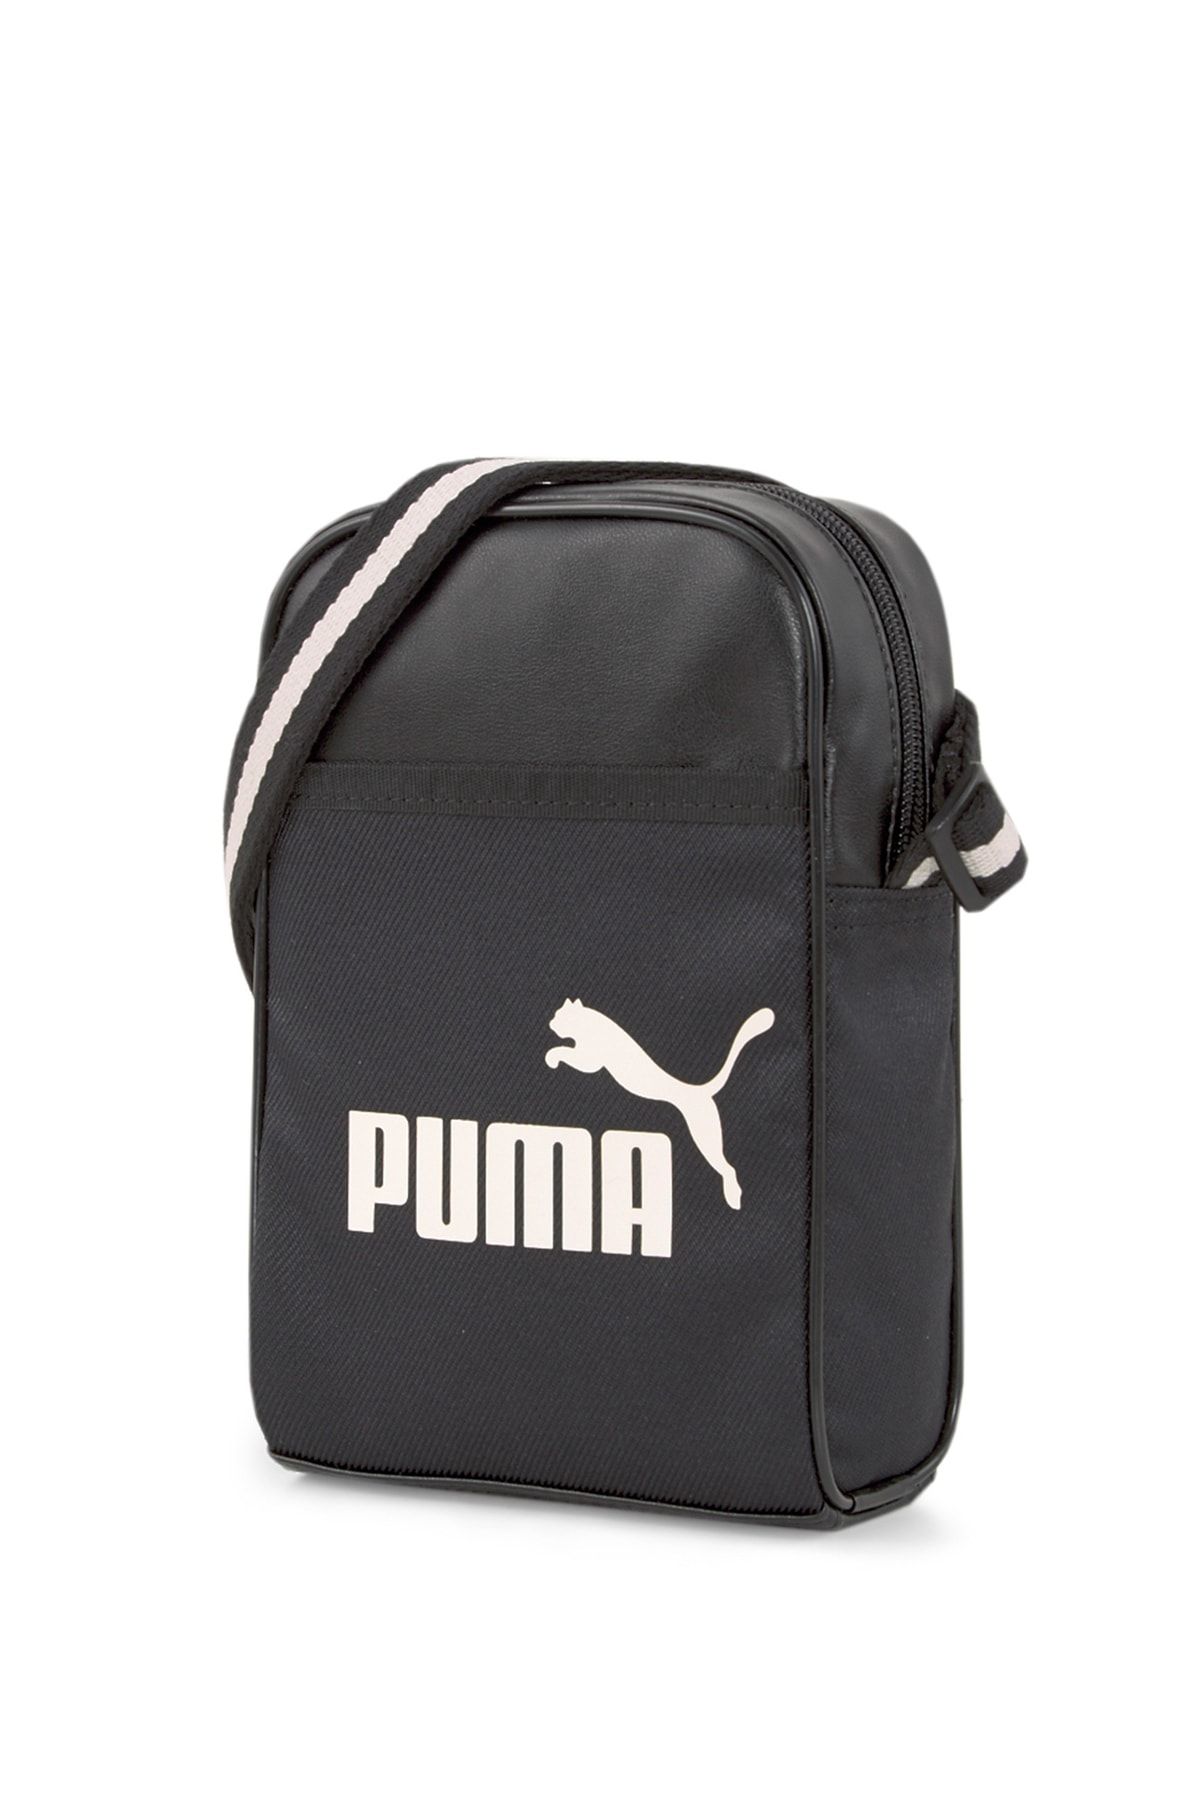 Puma Campus Compact Portable07882701